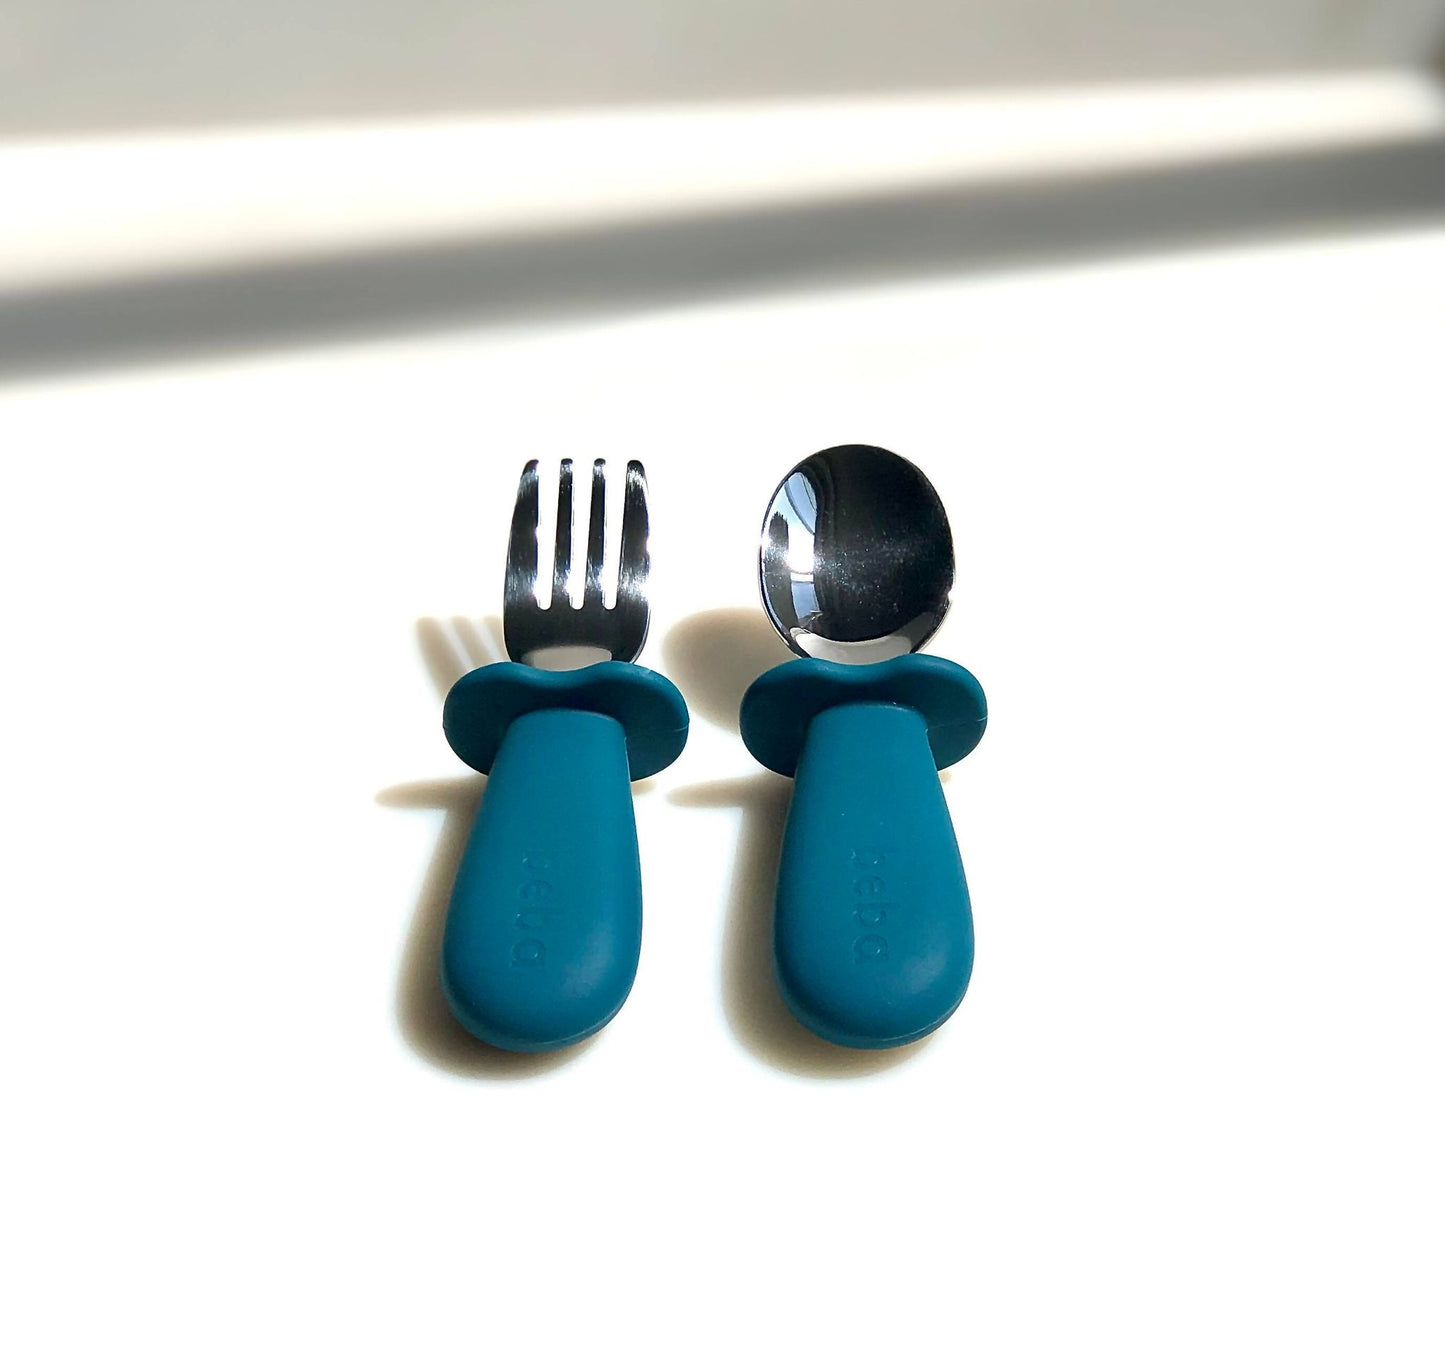 Toddler learning cutlery utensils